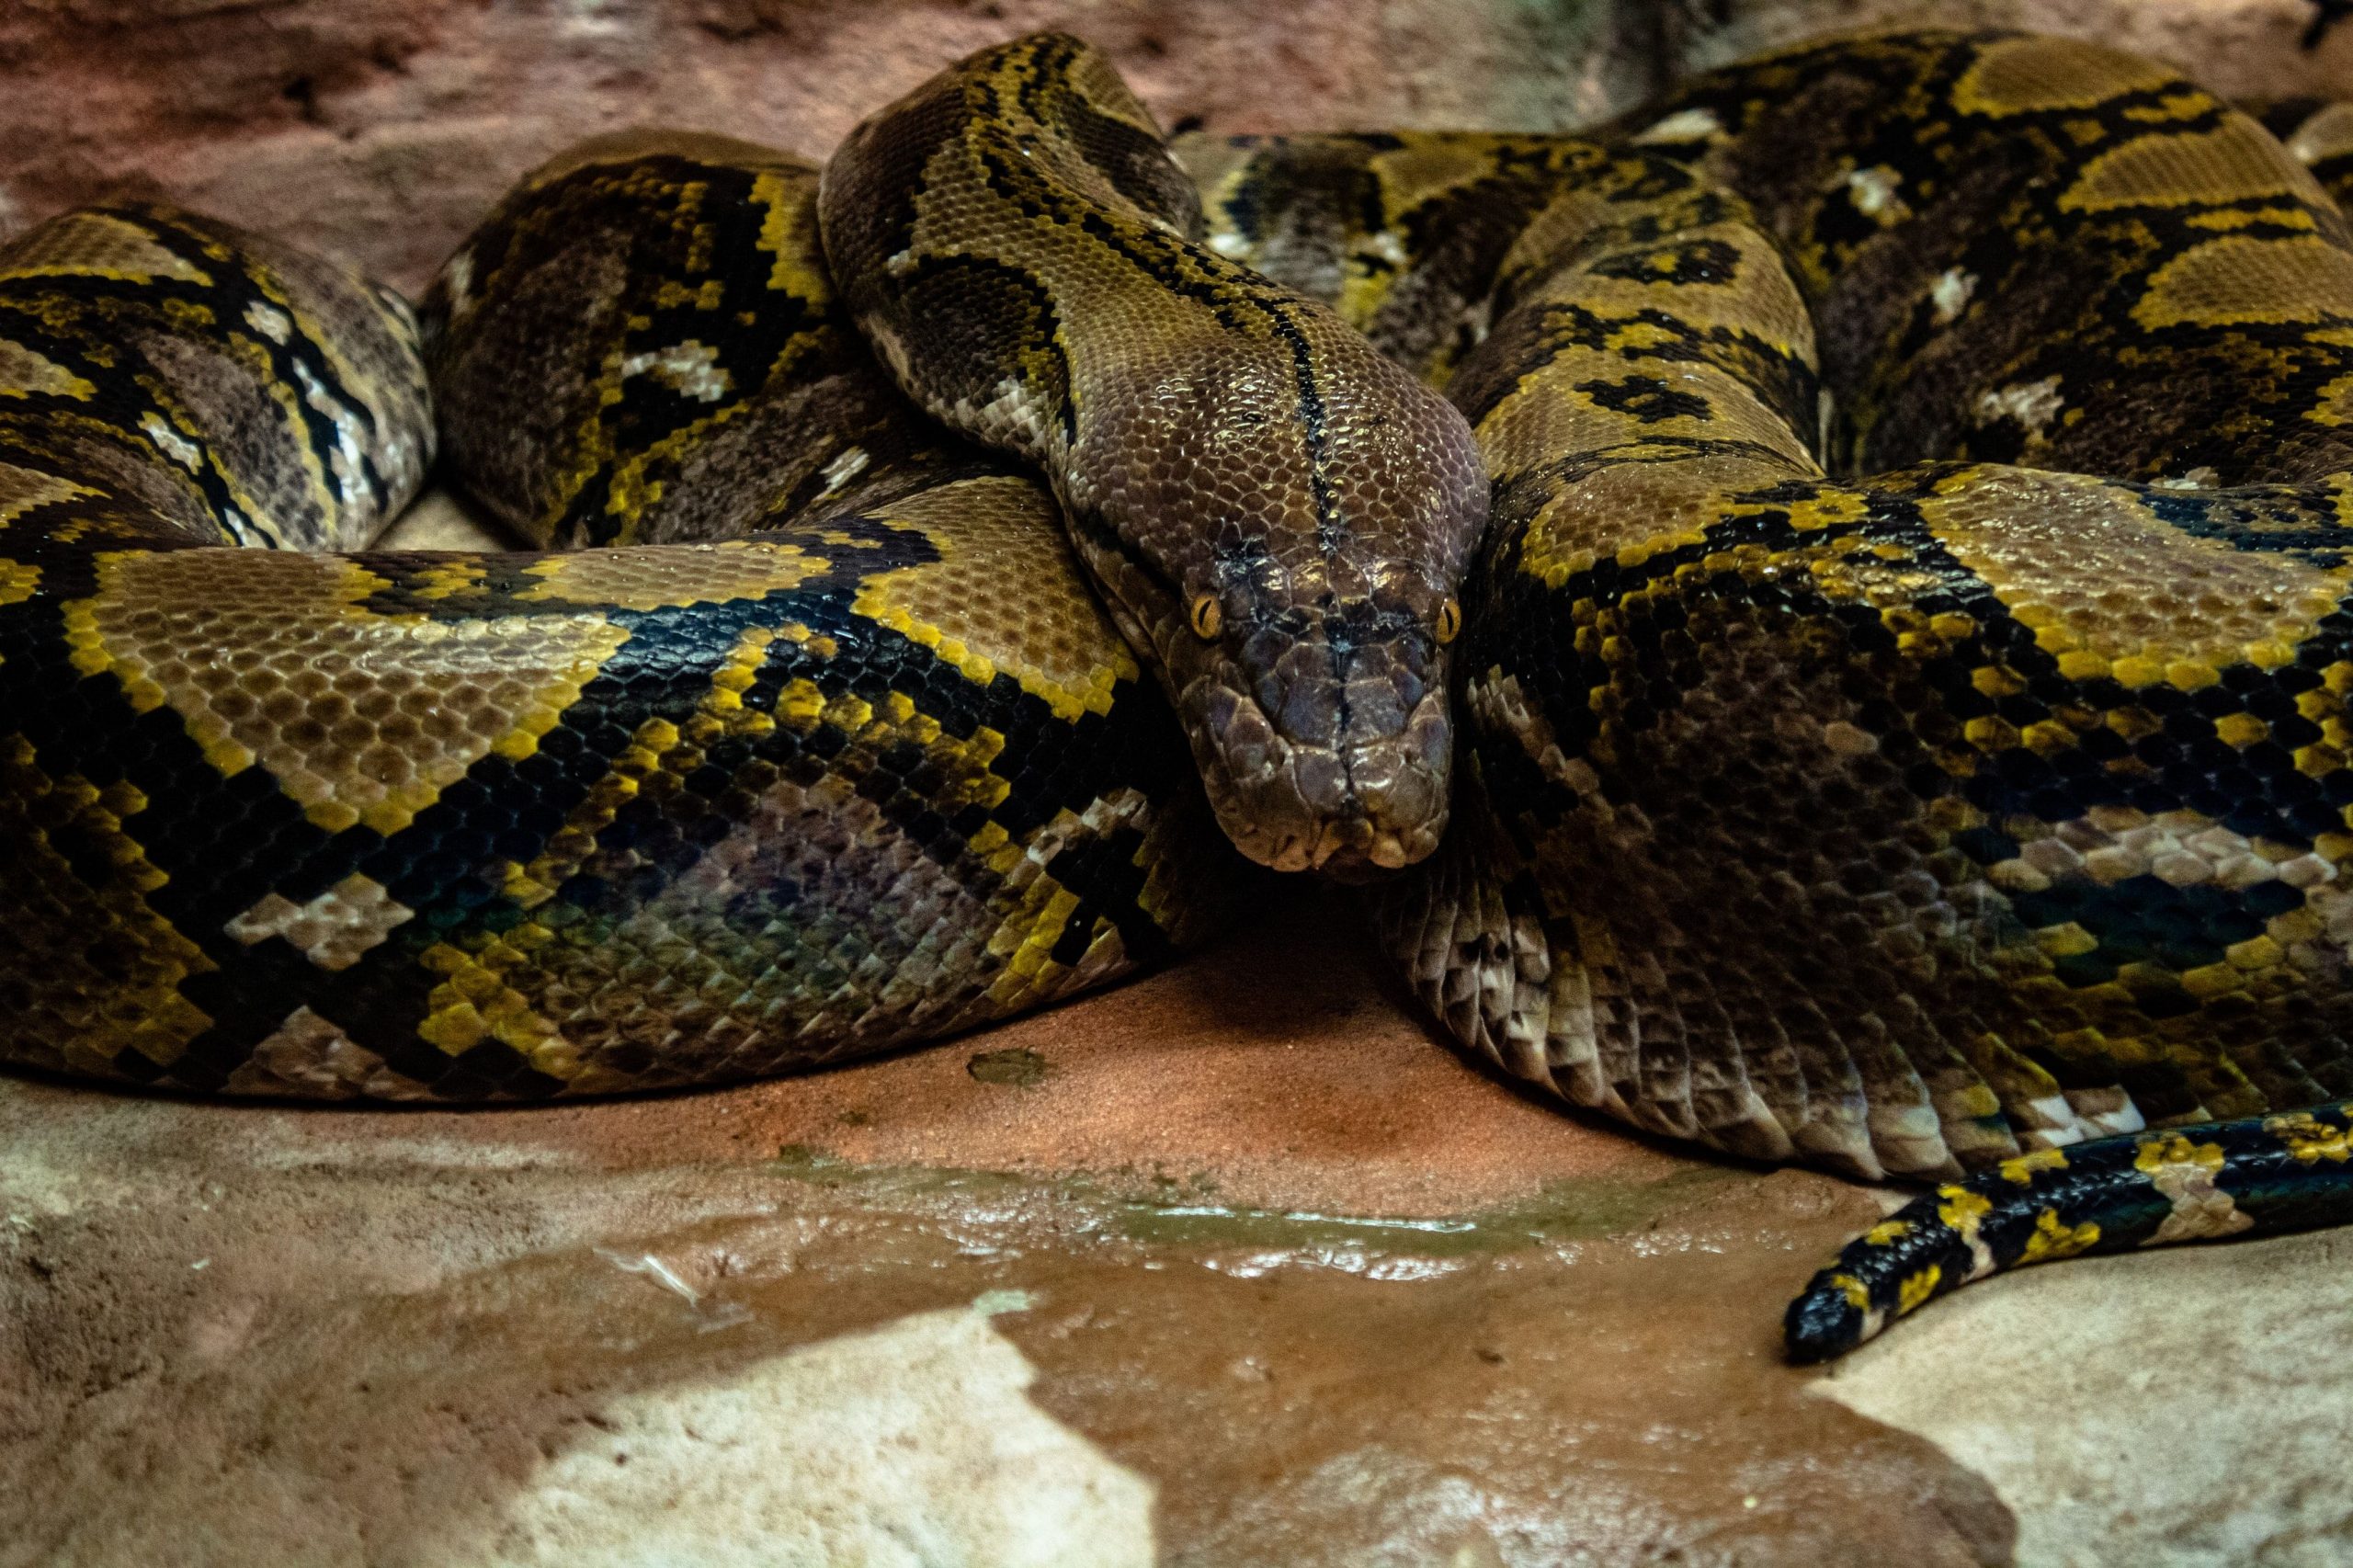 Rest after meal: Huge python that swallowed prey, found under car in Australia